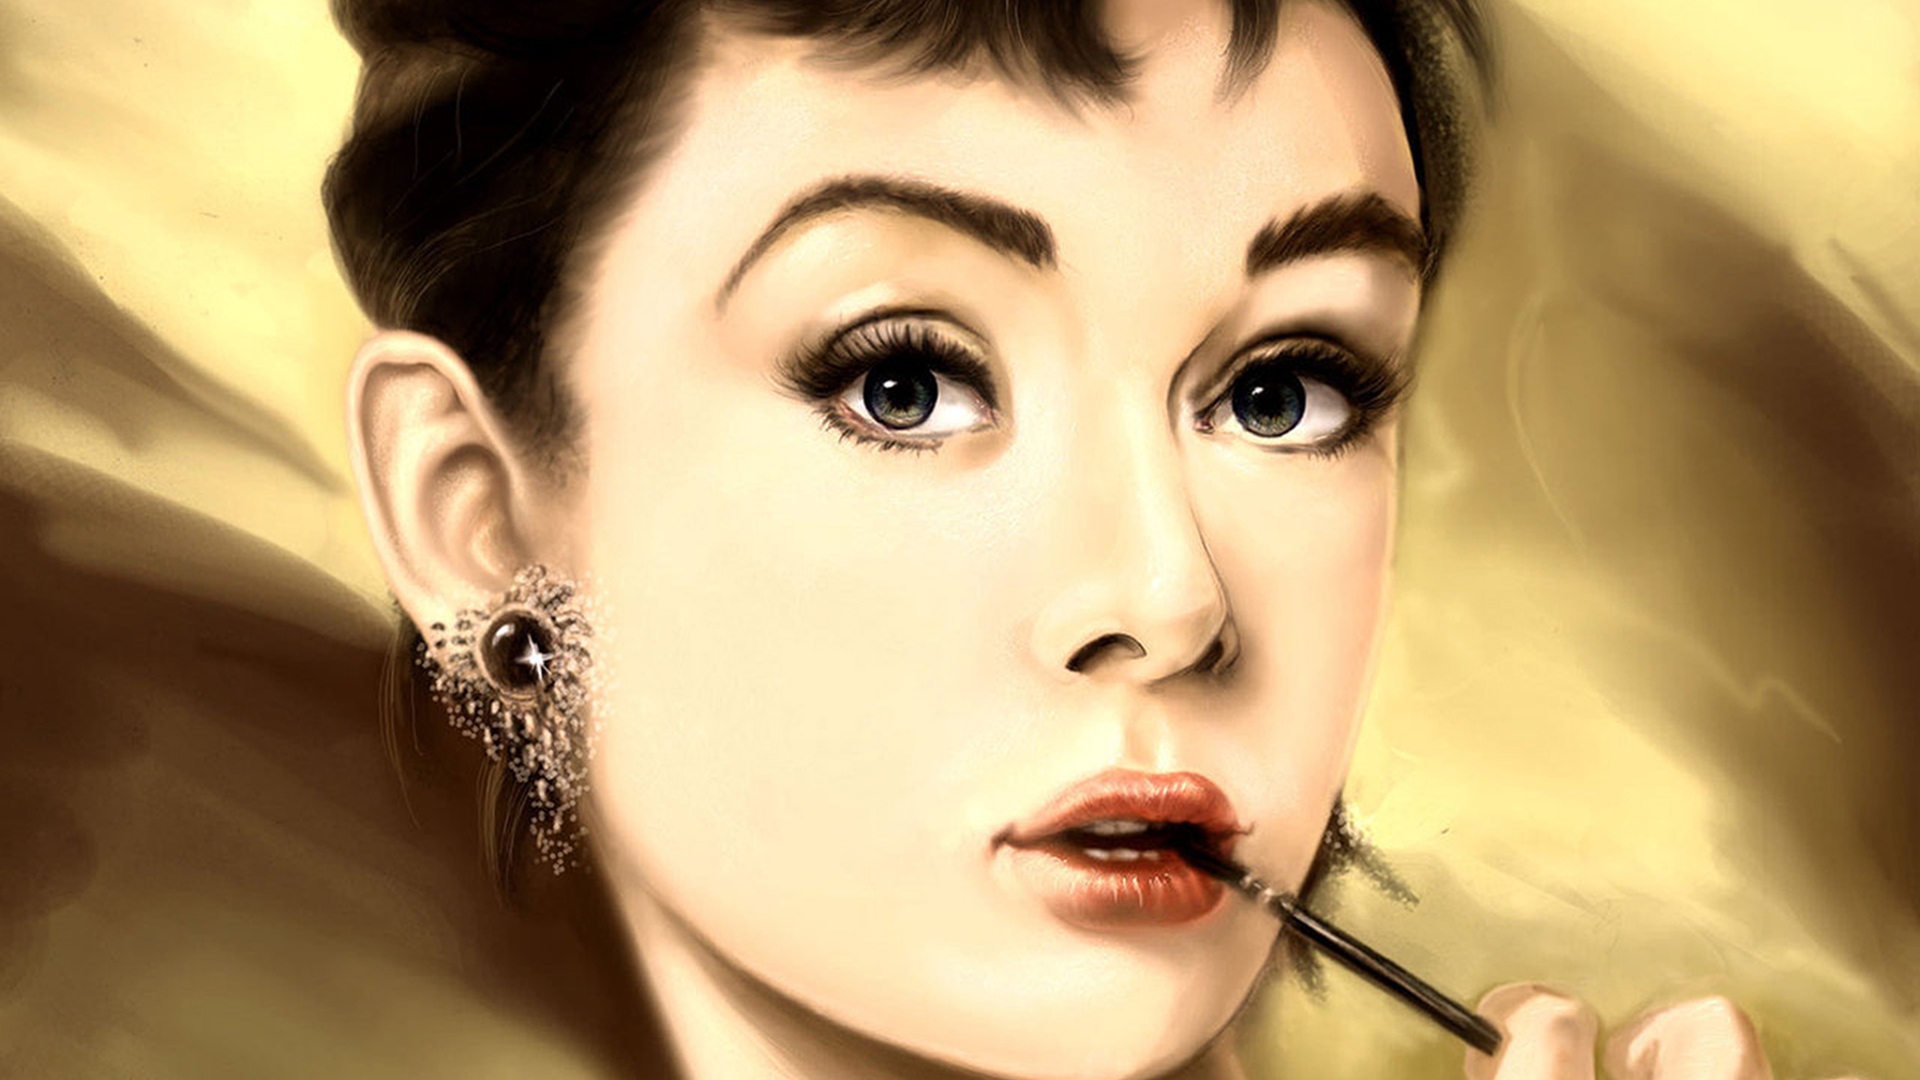 Audrey Hepburn Portrait Painting for 1920 x 1080 HDTV 1080p resolution